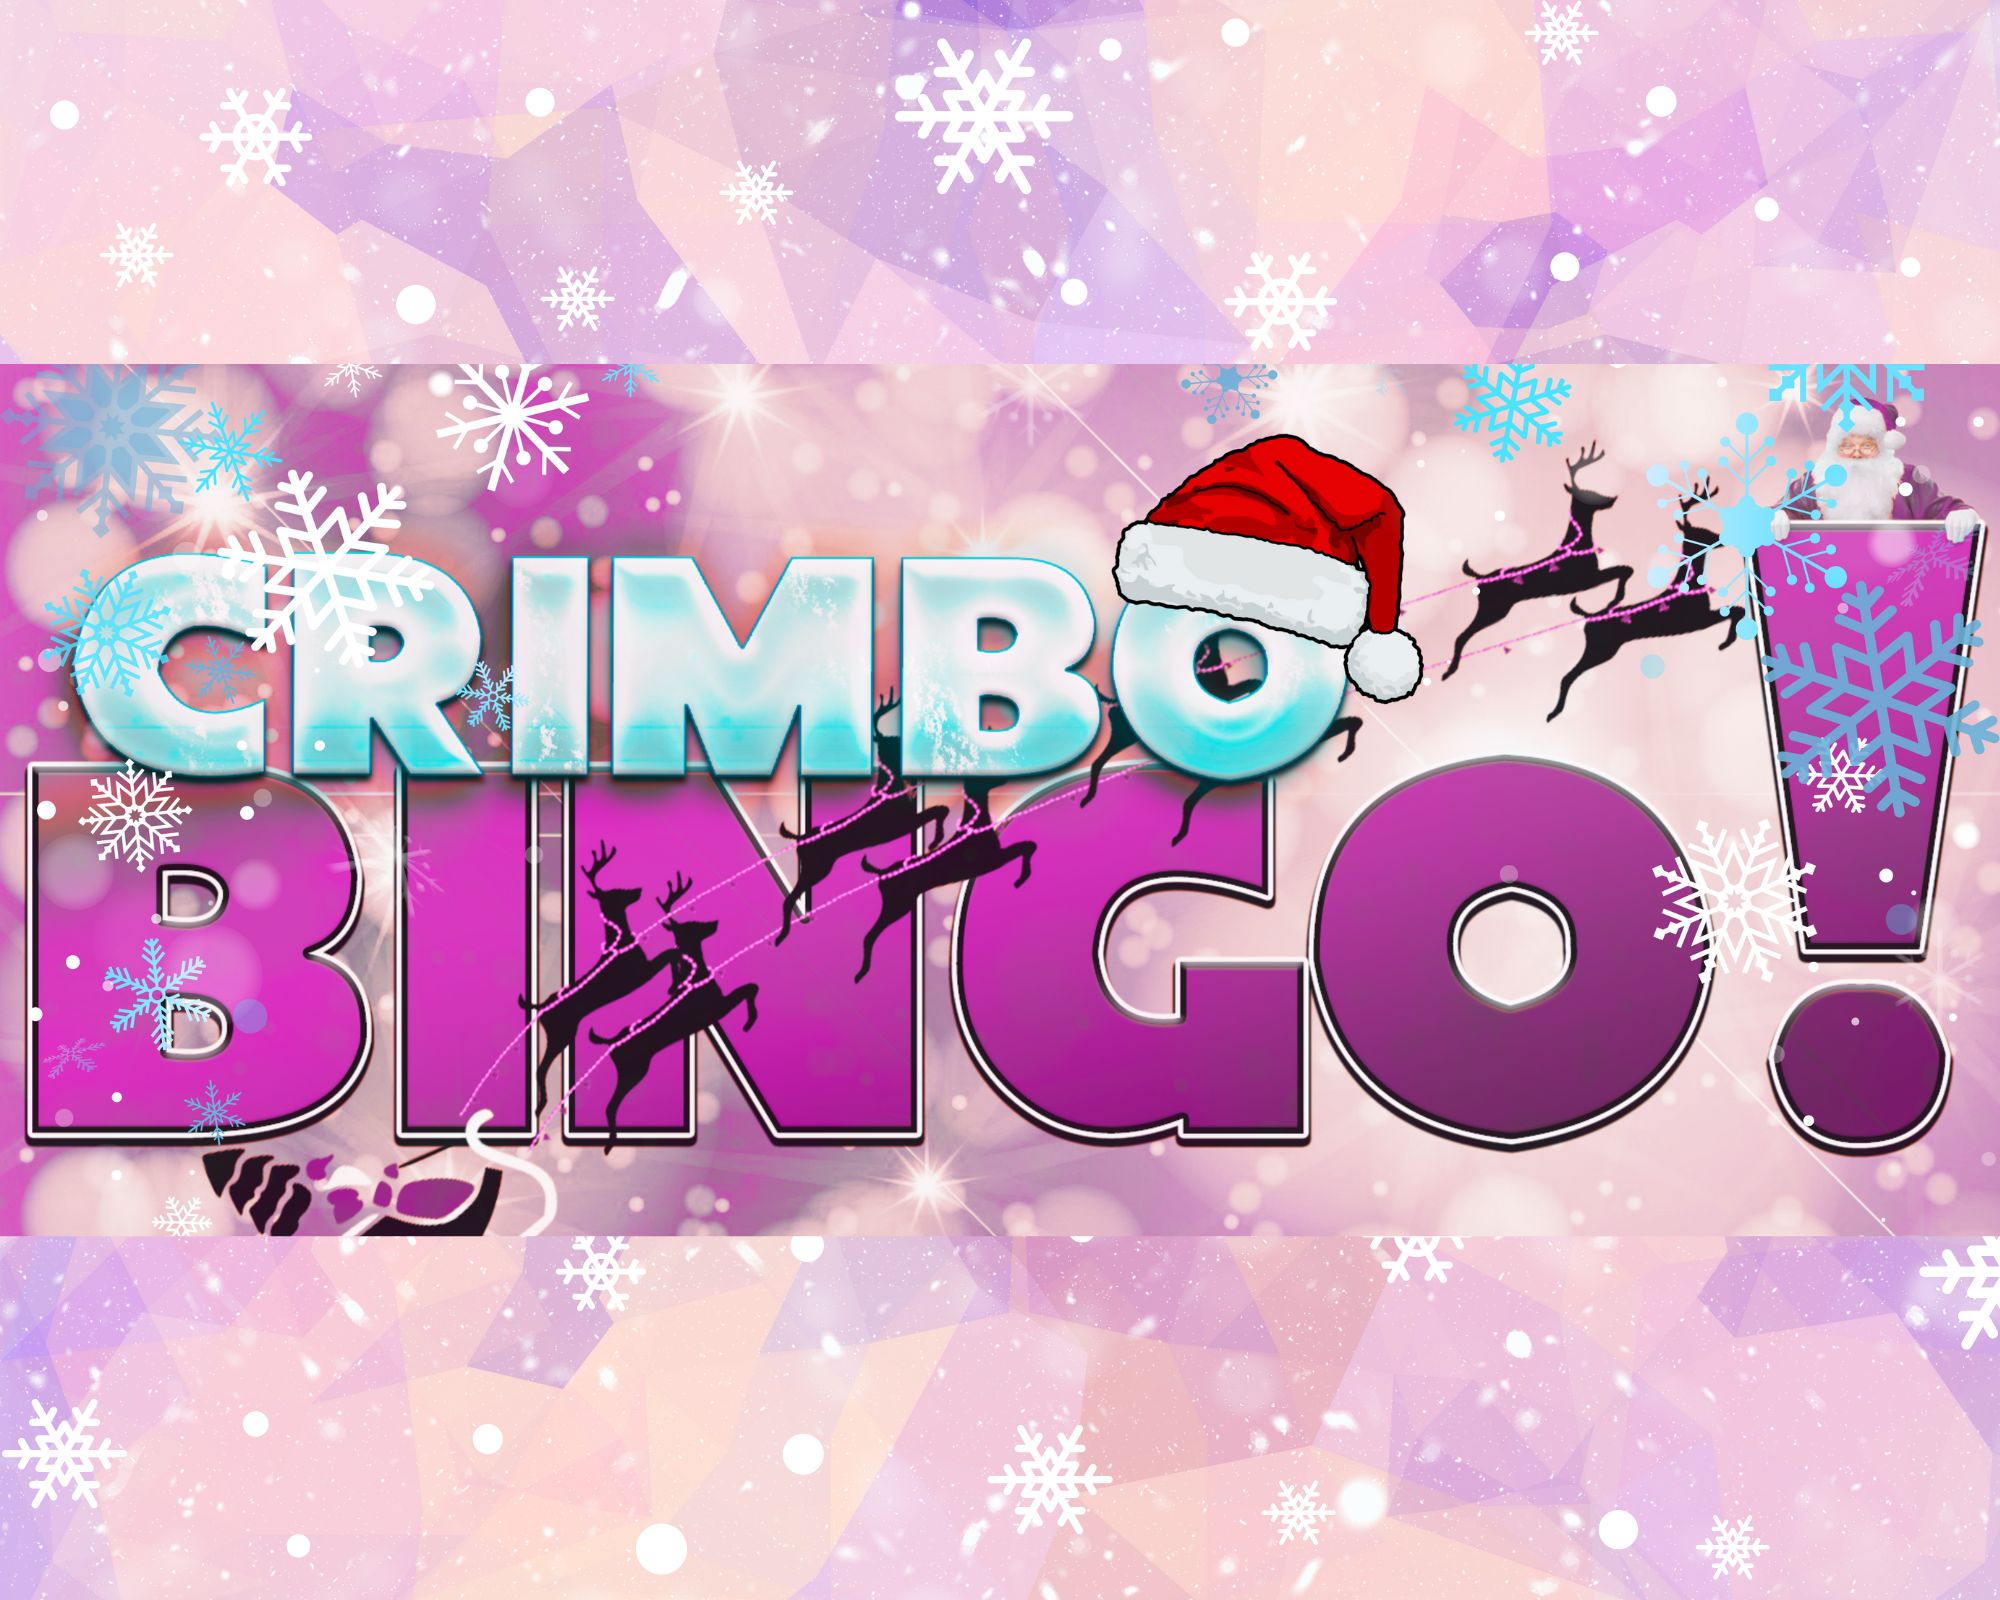 Crimbo Bingo Christmas Party Experience